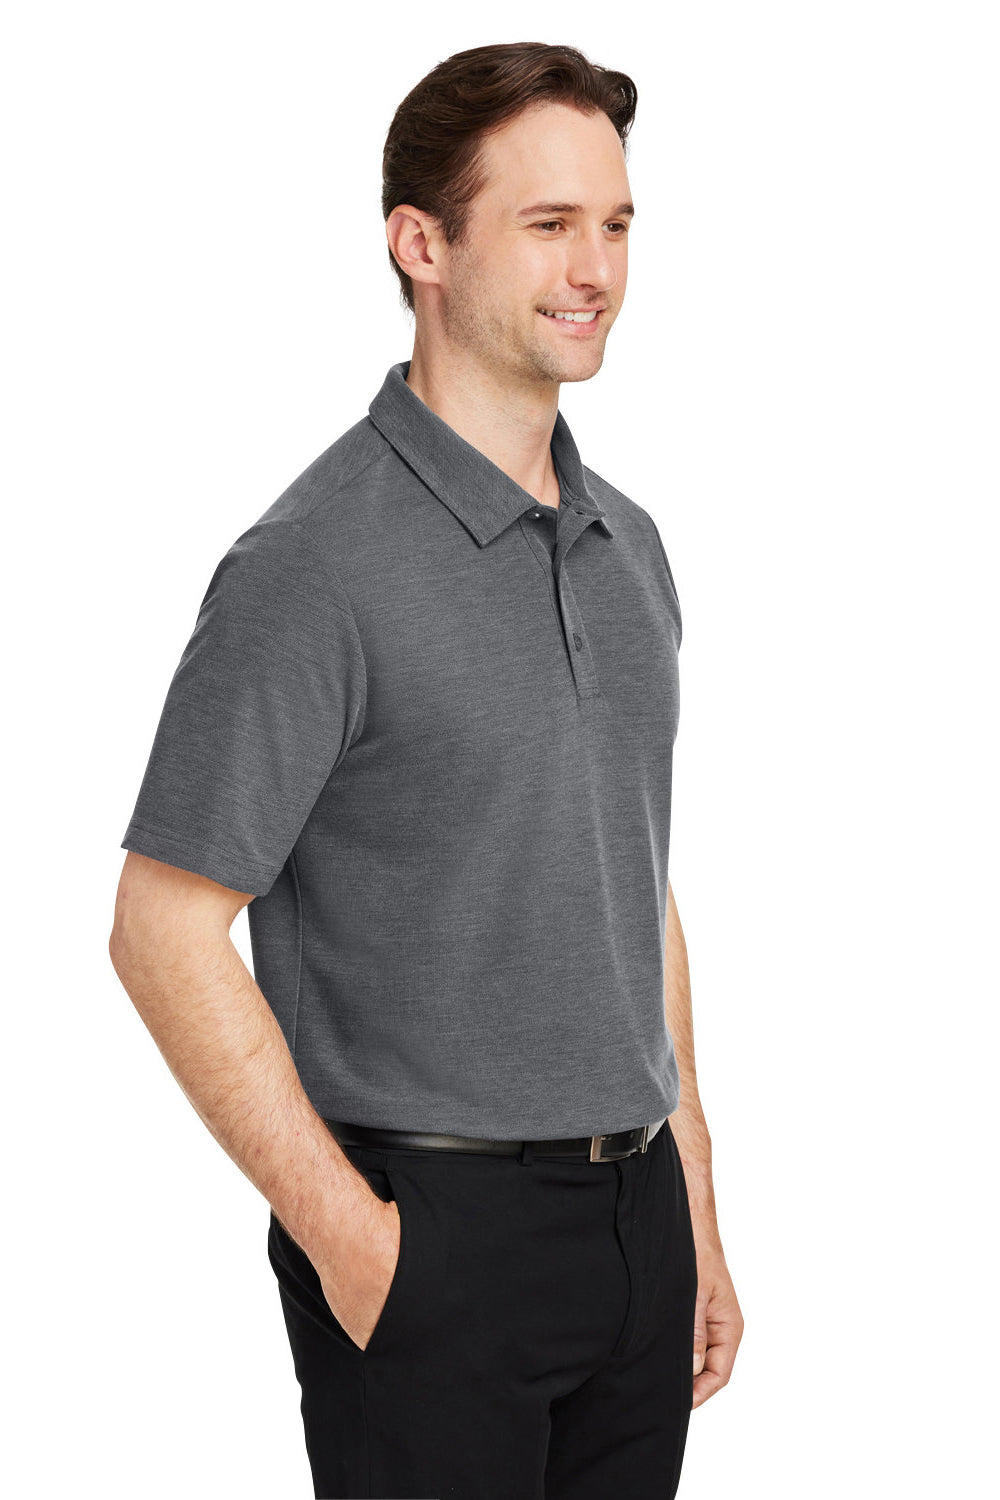 Core 365 CE112 Mens Fusion ChromaSoft Performance Moisture Wicking Short Sleeve Polo Shirt Heather Carbon Grey 3Q